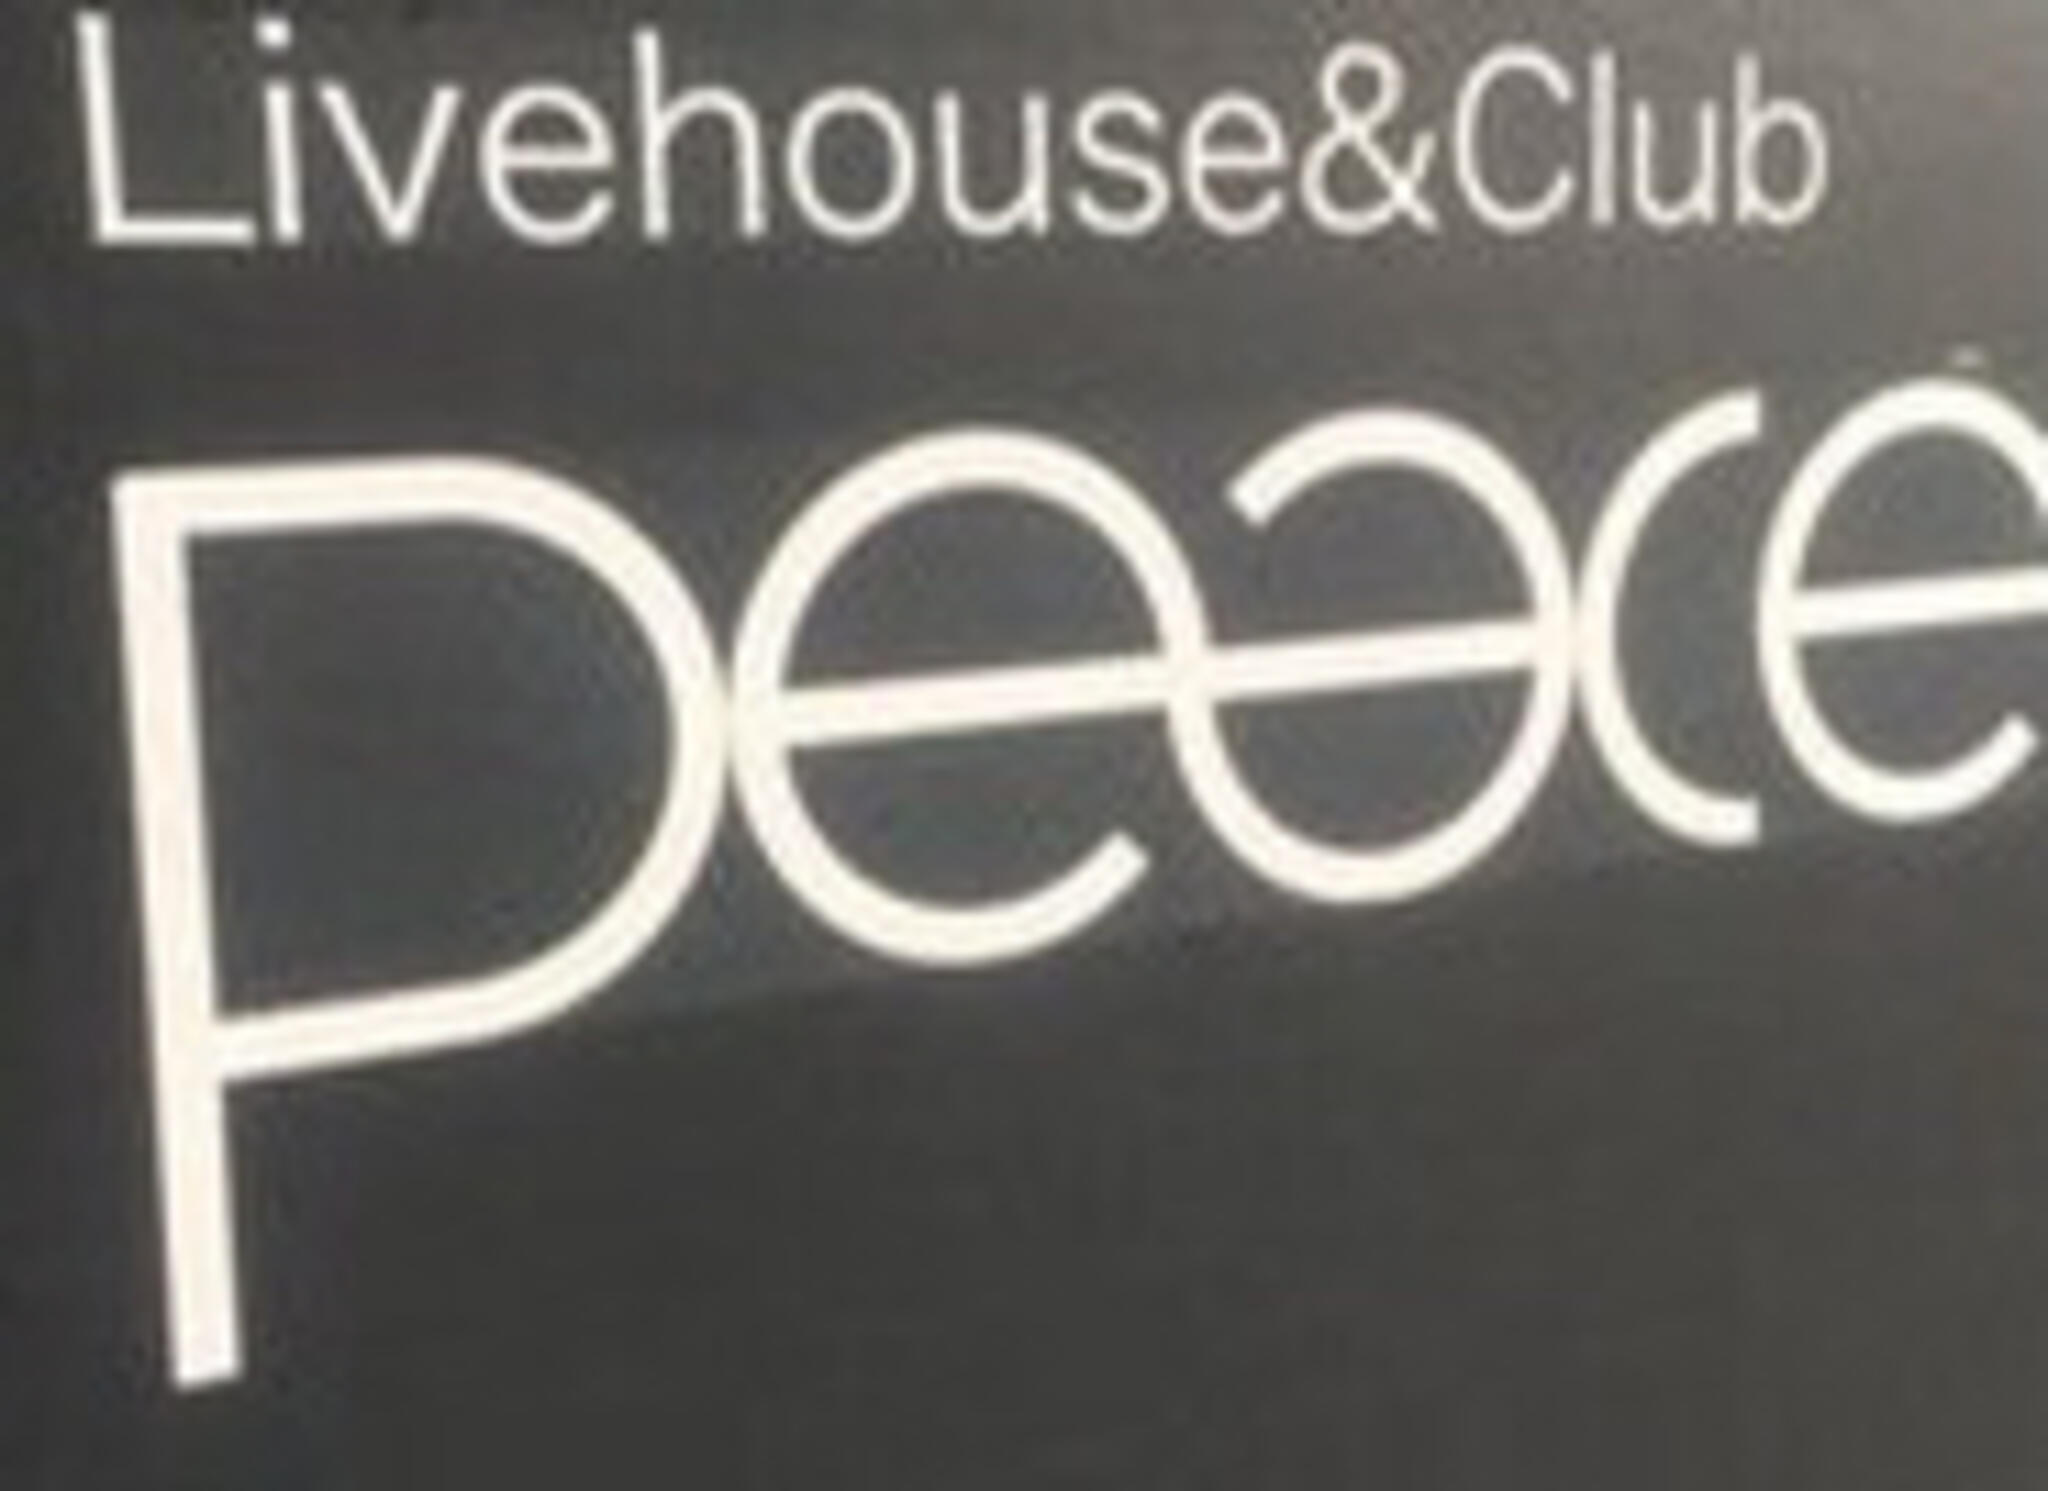 Livehouse&Club・Peaceの代表写真2